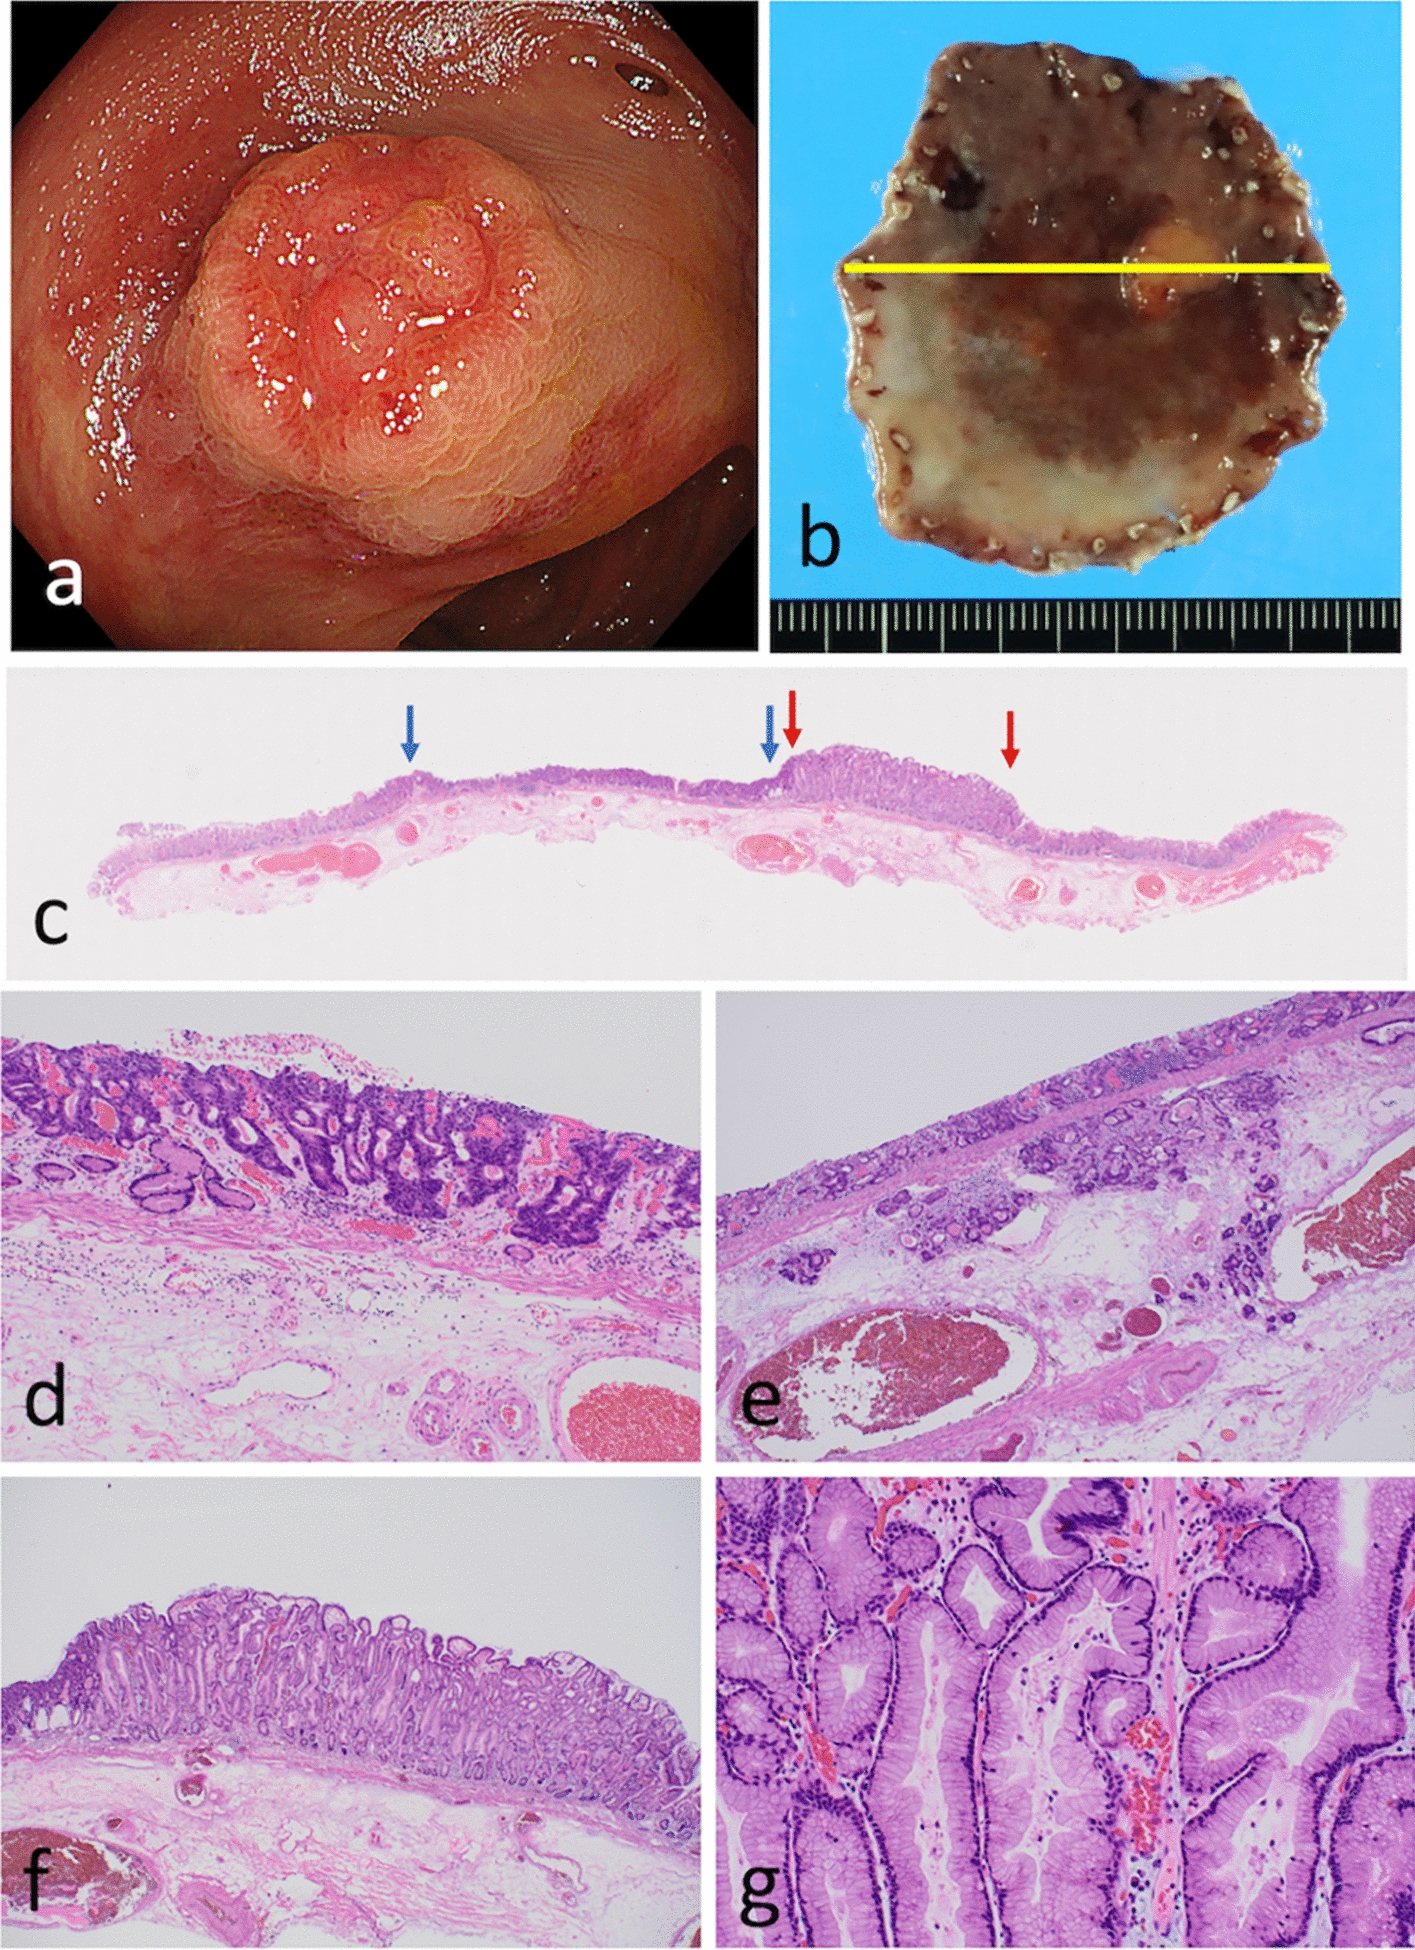 A gastric invasive tubular adenocarcinomatous lesion arising from foveolar-type neoplasia: molecular histogenesis